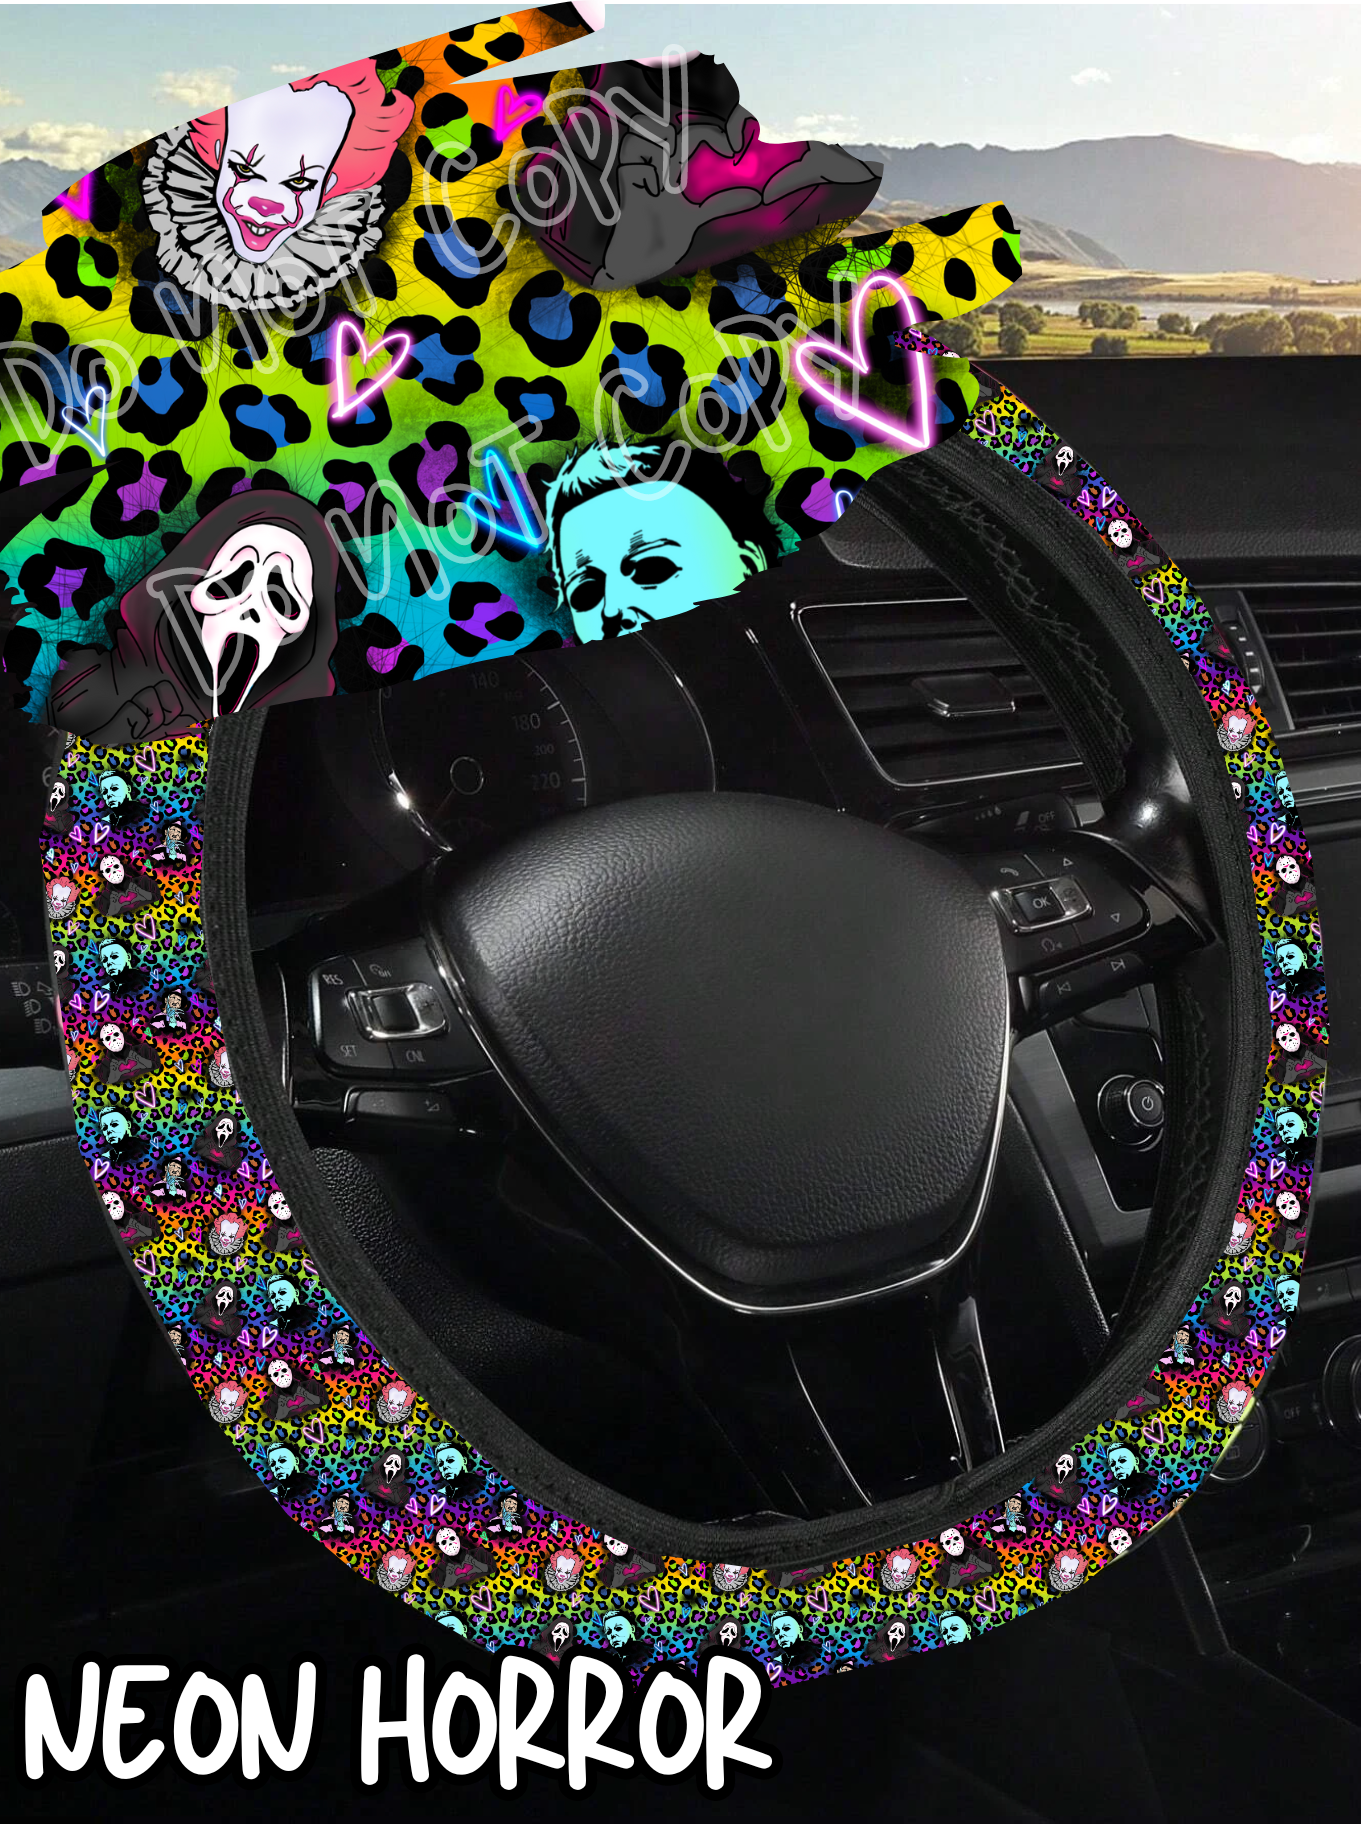 Neon Horror - Steering Wheel Cover Preorder Round 3 Closing 10/25 ETA Early Dec